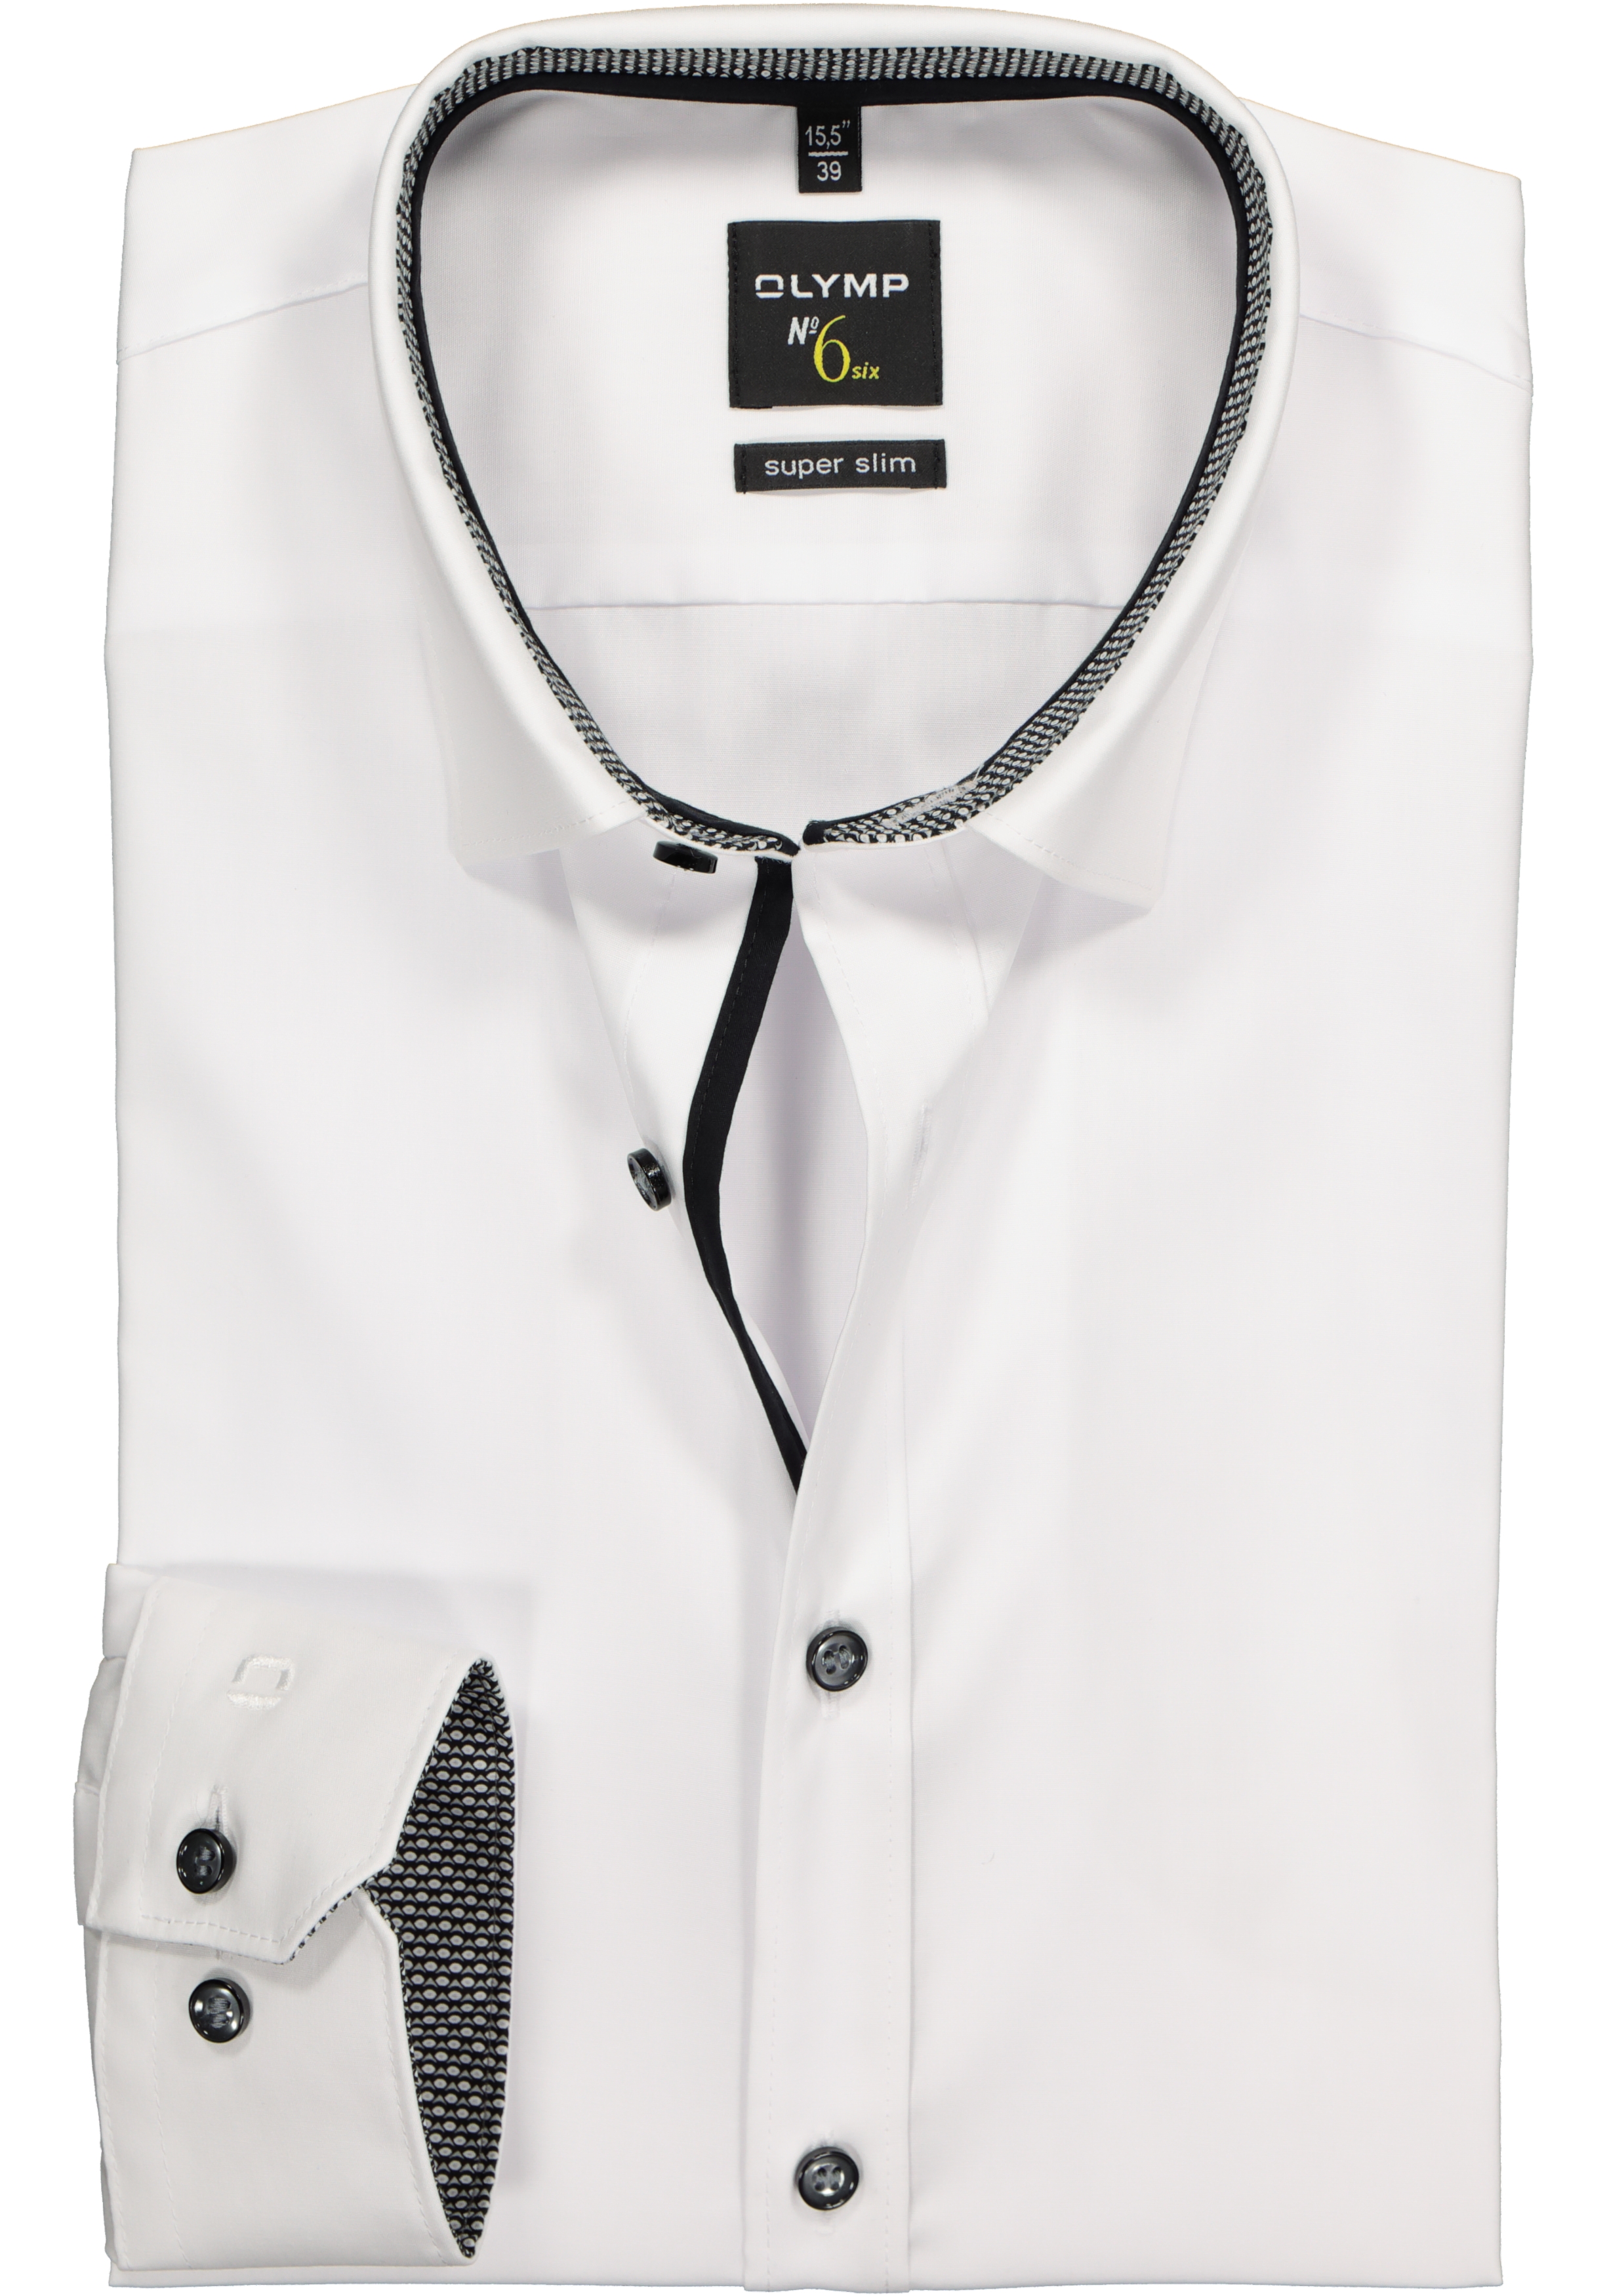 eigendom Ramen wassen relais OLYMP No. Six super slim fit overhemd, wit (zwart contrast) - SALE tot 70%  korting